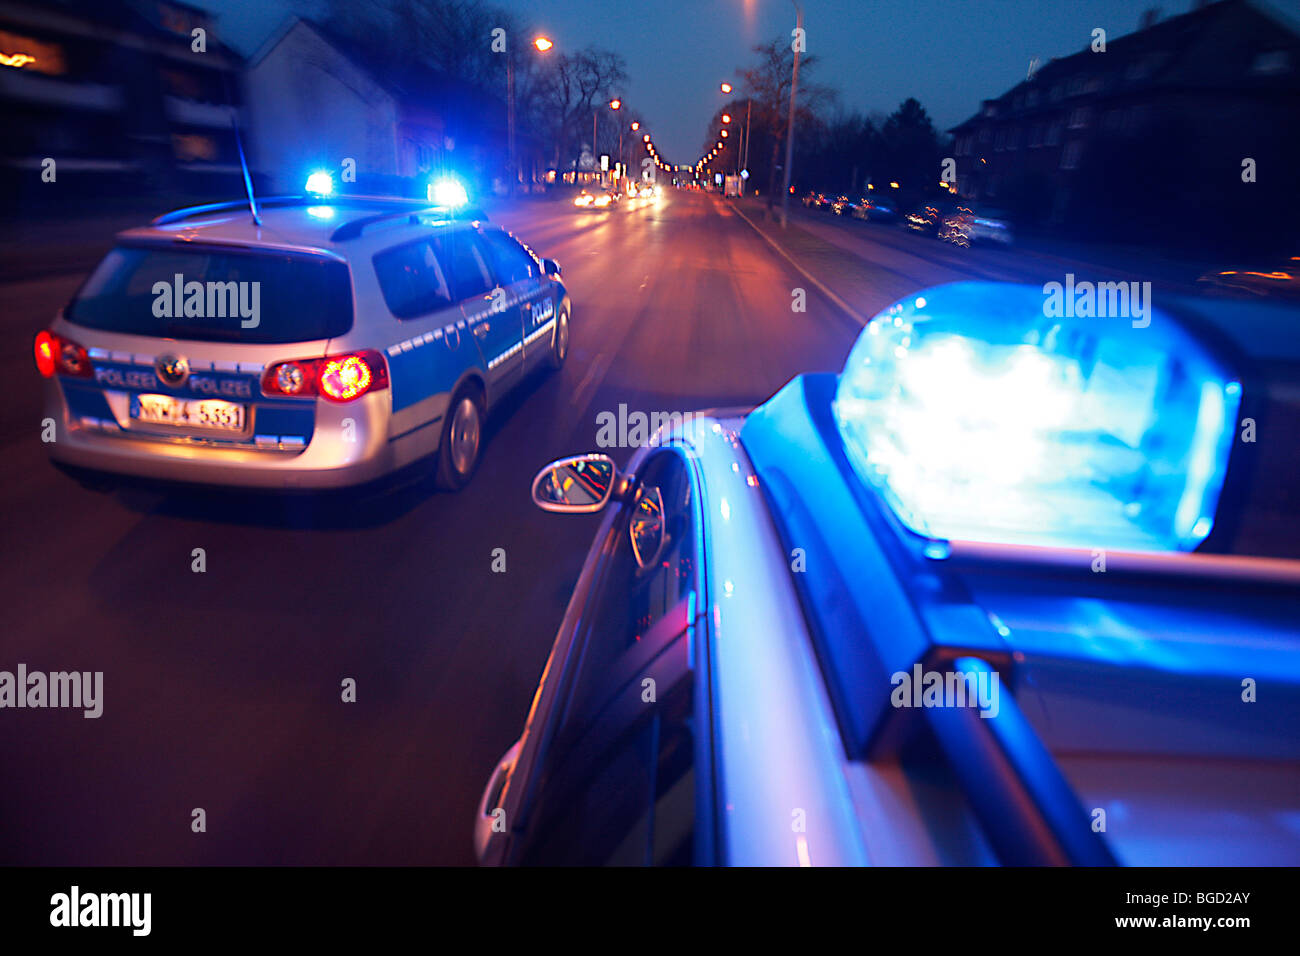 Sirena policial fotografías e imágenes de alta resolución - Alamy